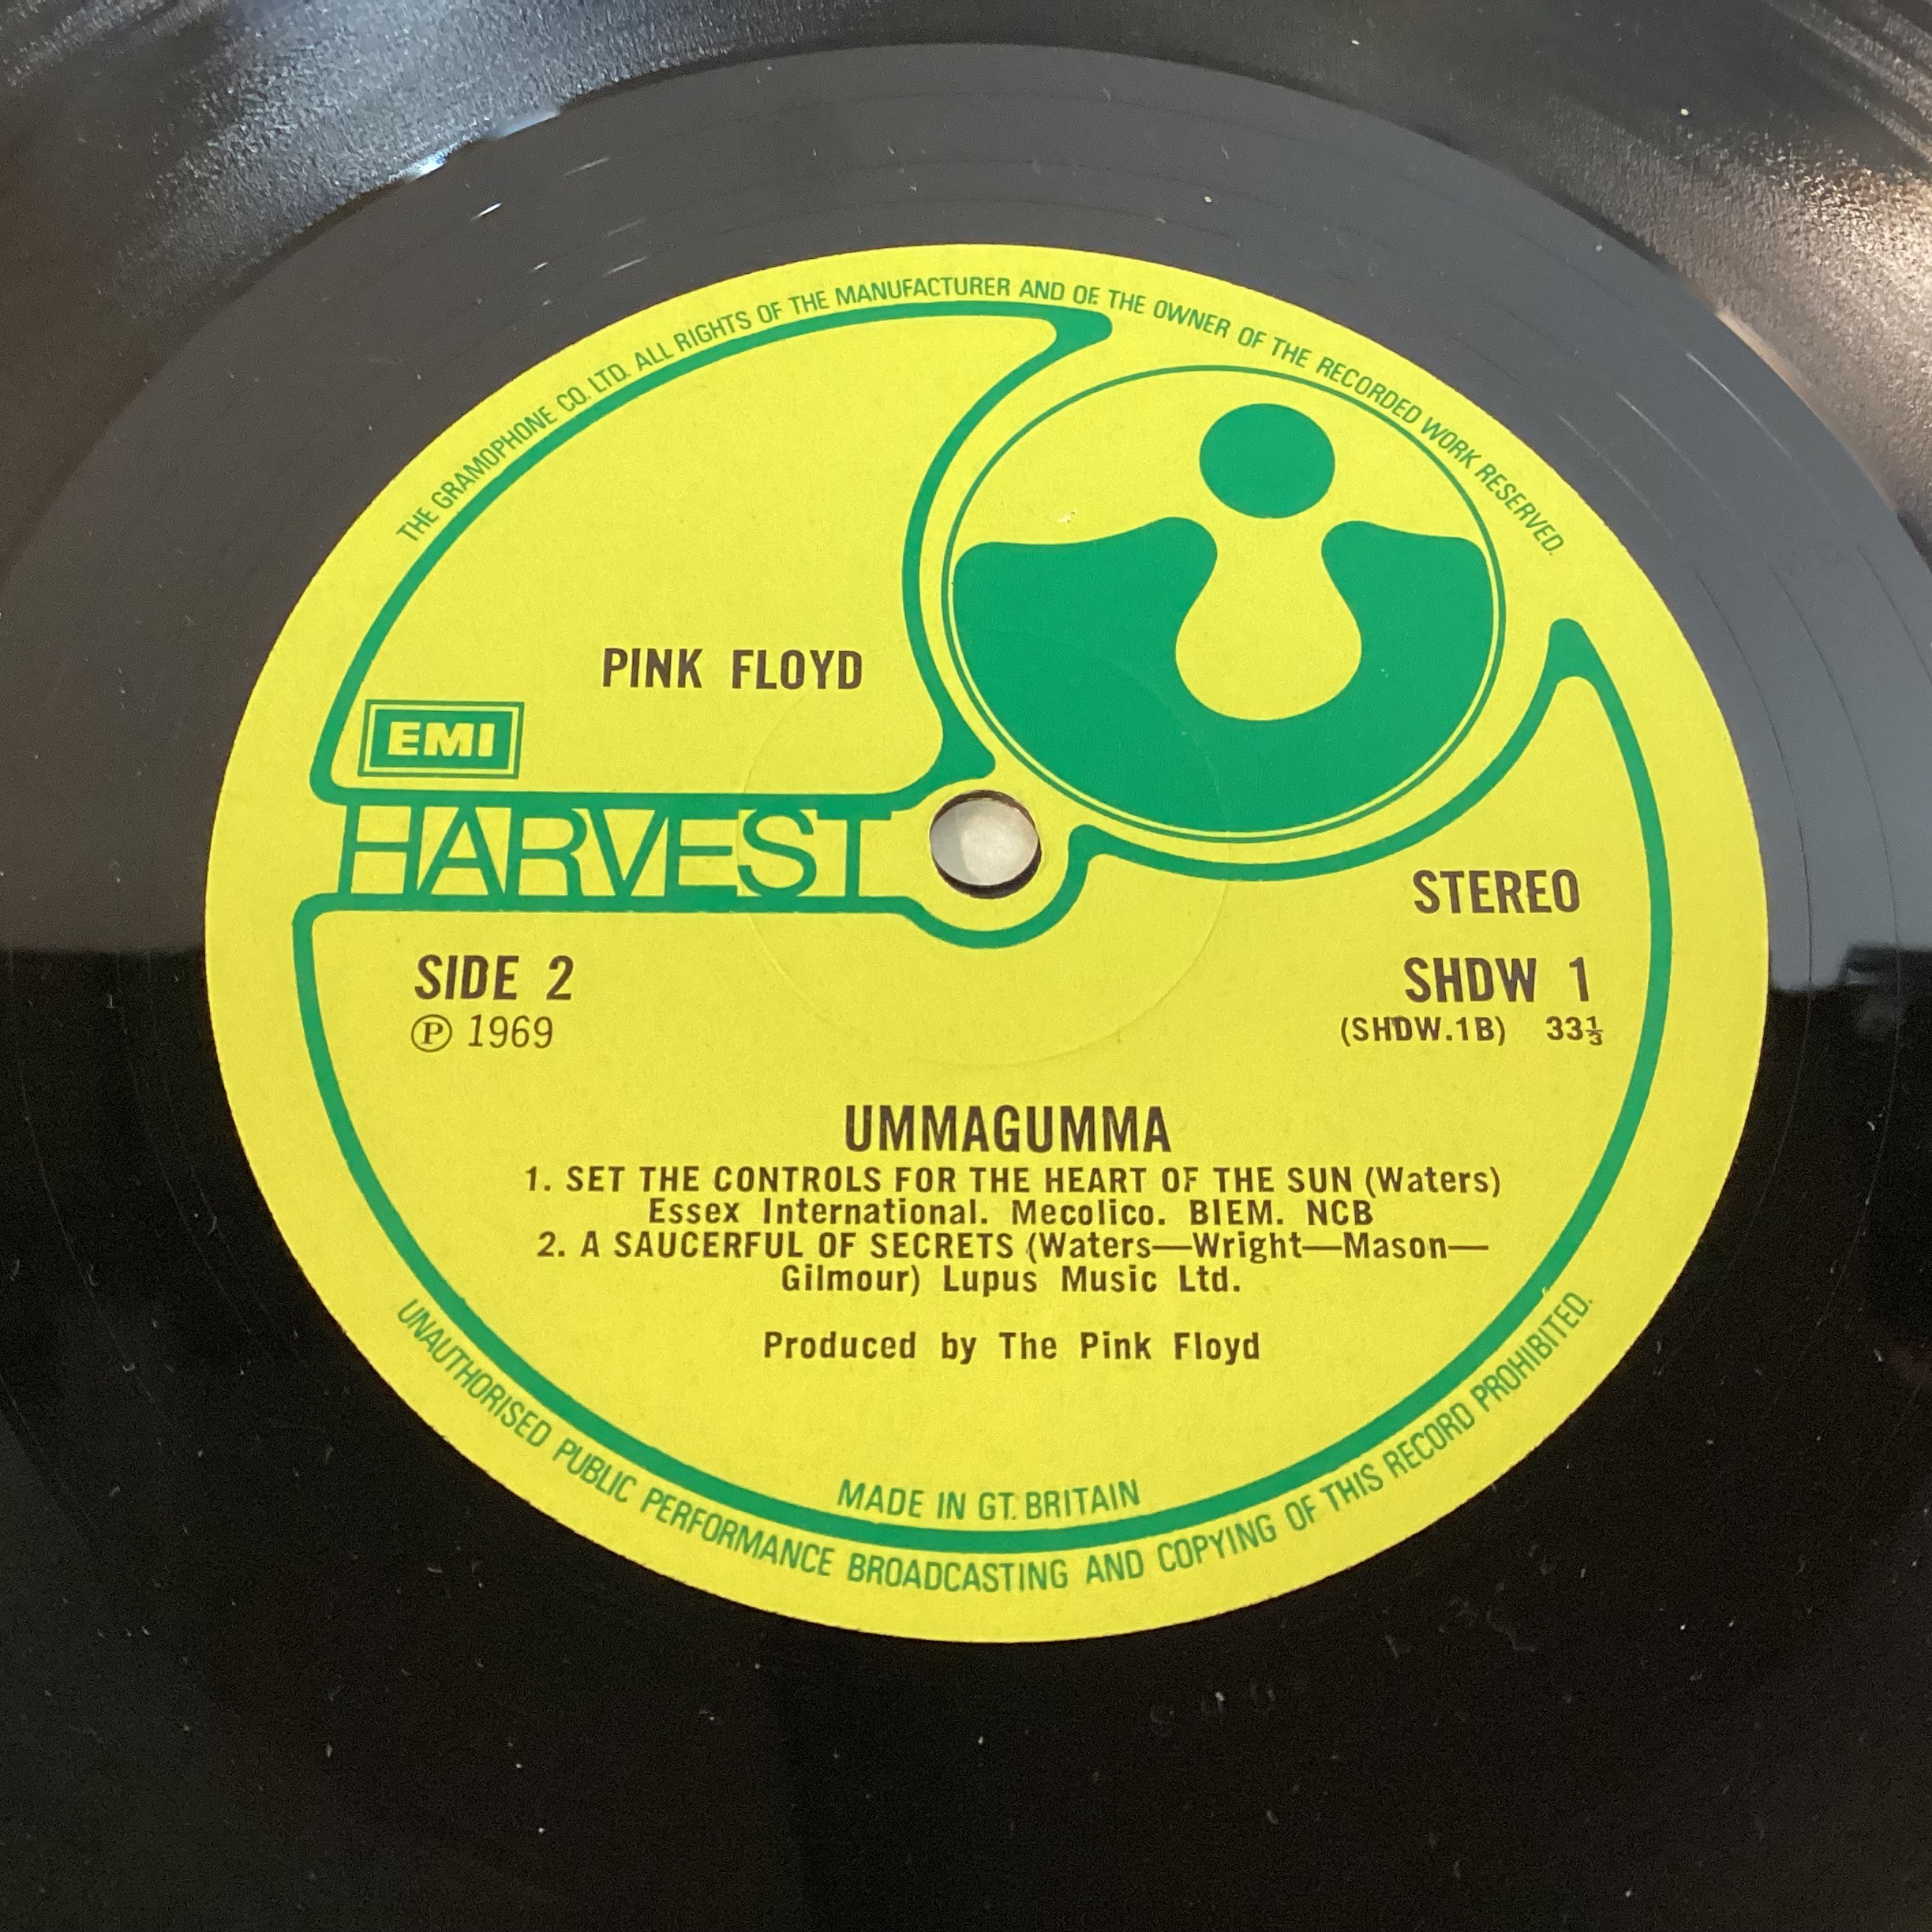 PINK FLOYD ‘UMMAGUMMA’ DOUBLE VINYL ALBUM. 1969 UK double vinyl LP with EMI logo on the labels. In a - Image 4 of 7